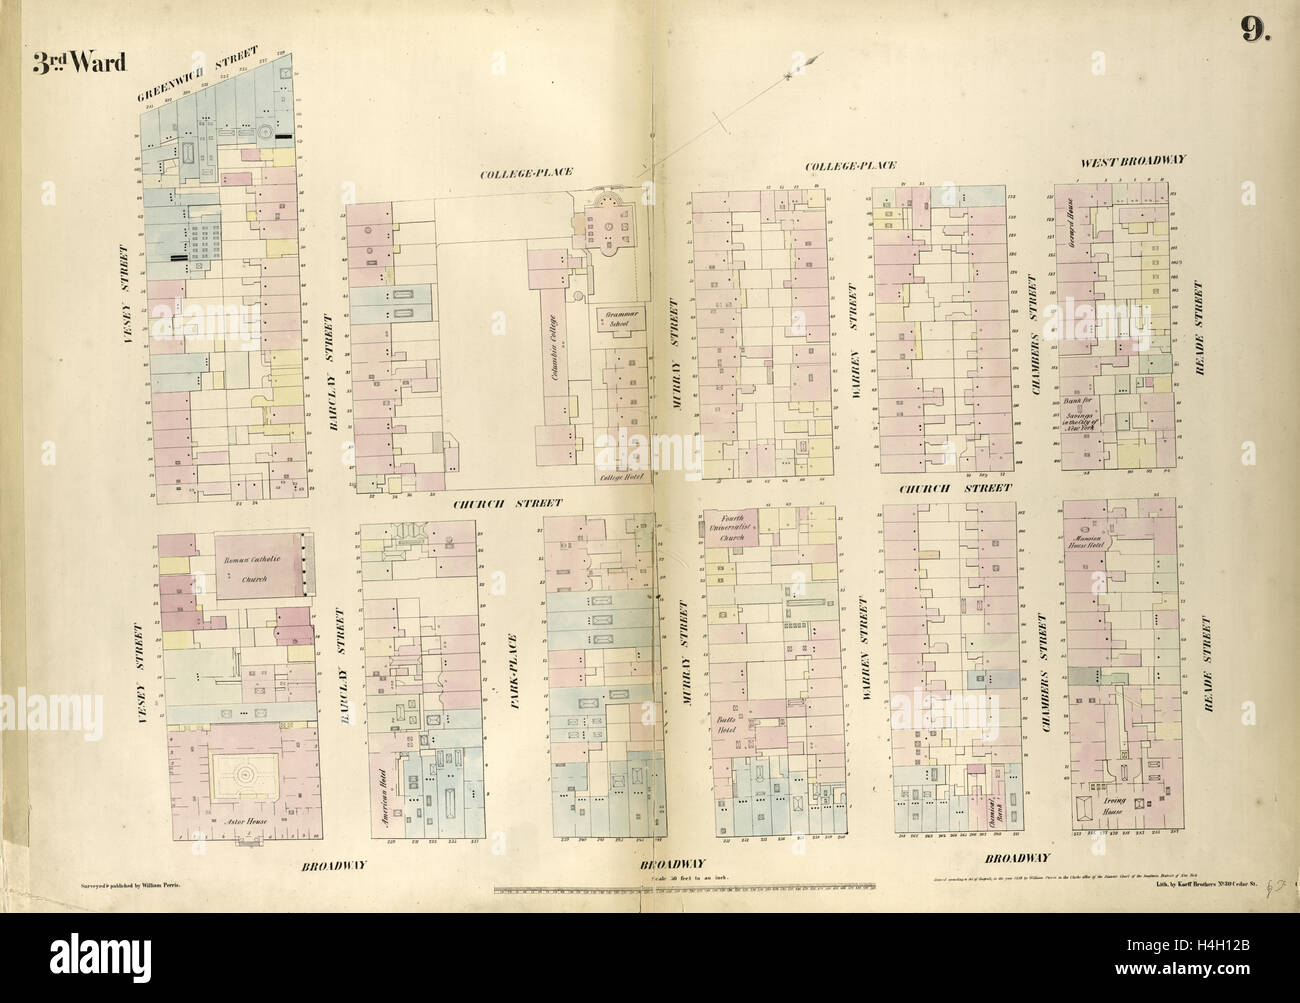 La piastra 9: Mappa delimitata da Greenwich Street, Barclay Street, College Place, West Broadway, Reade Street e Broadway, Vesey Street. Foto Stock